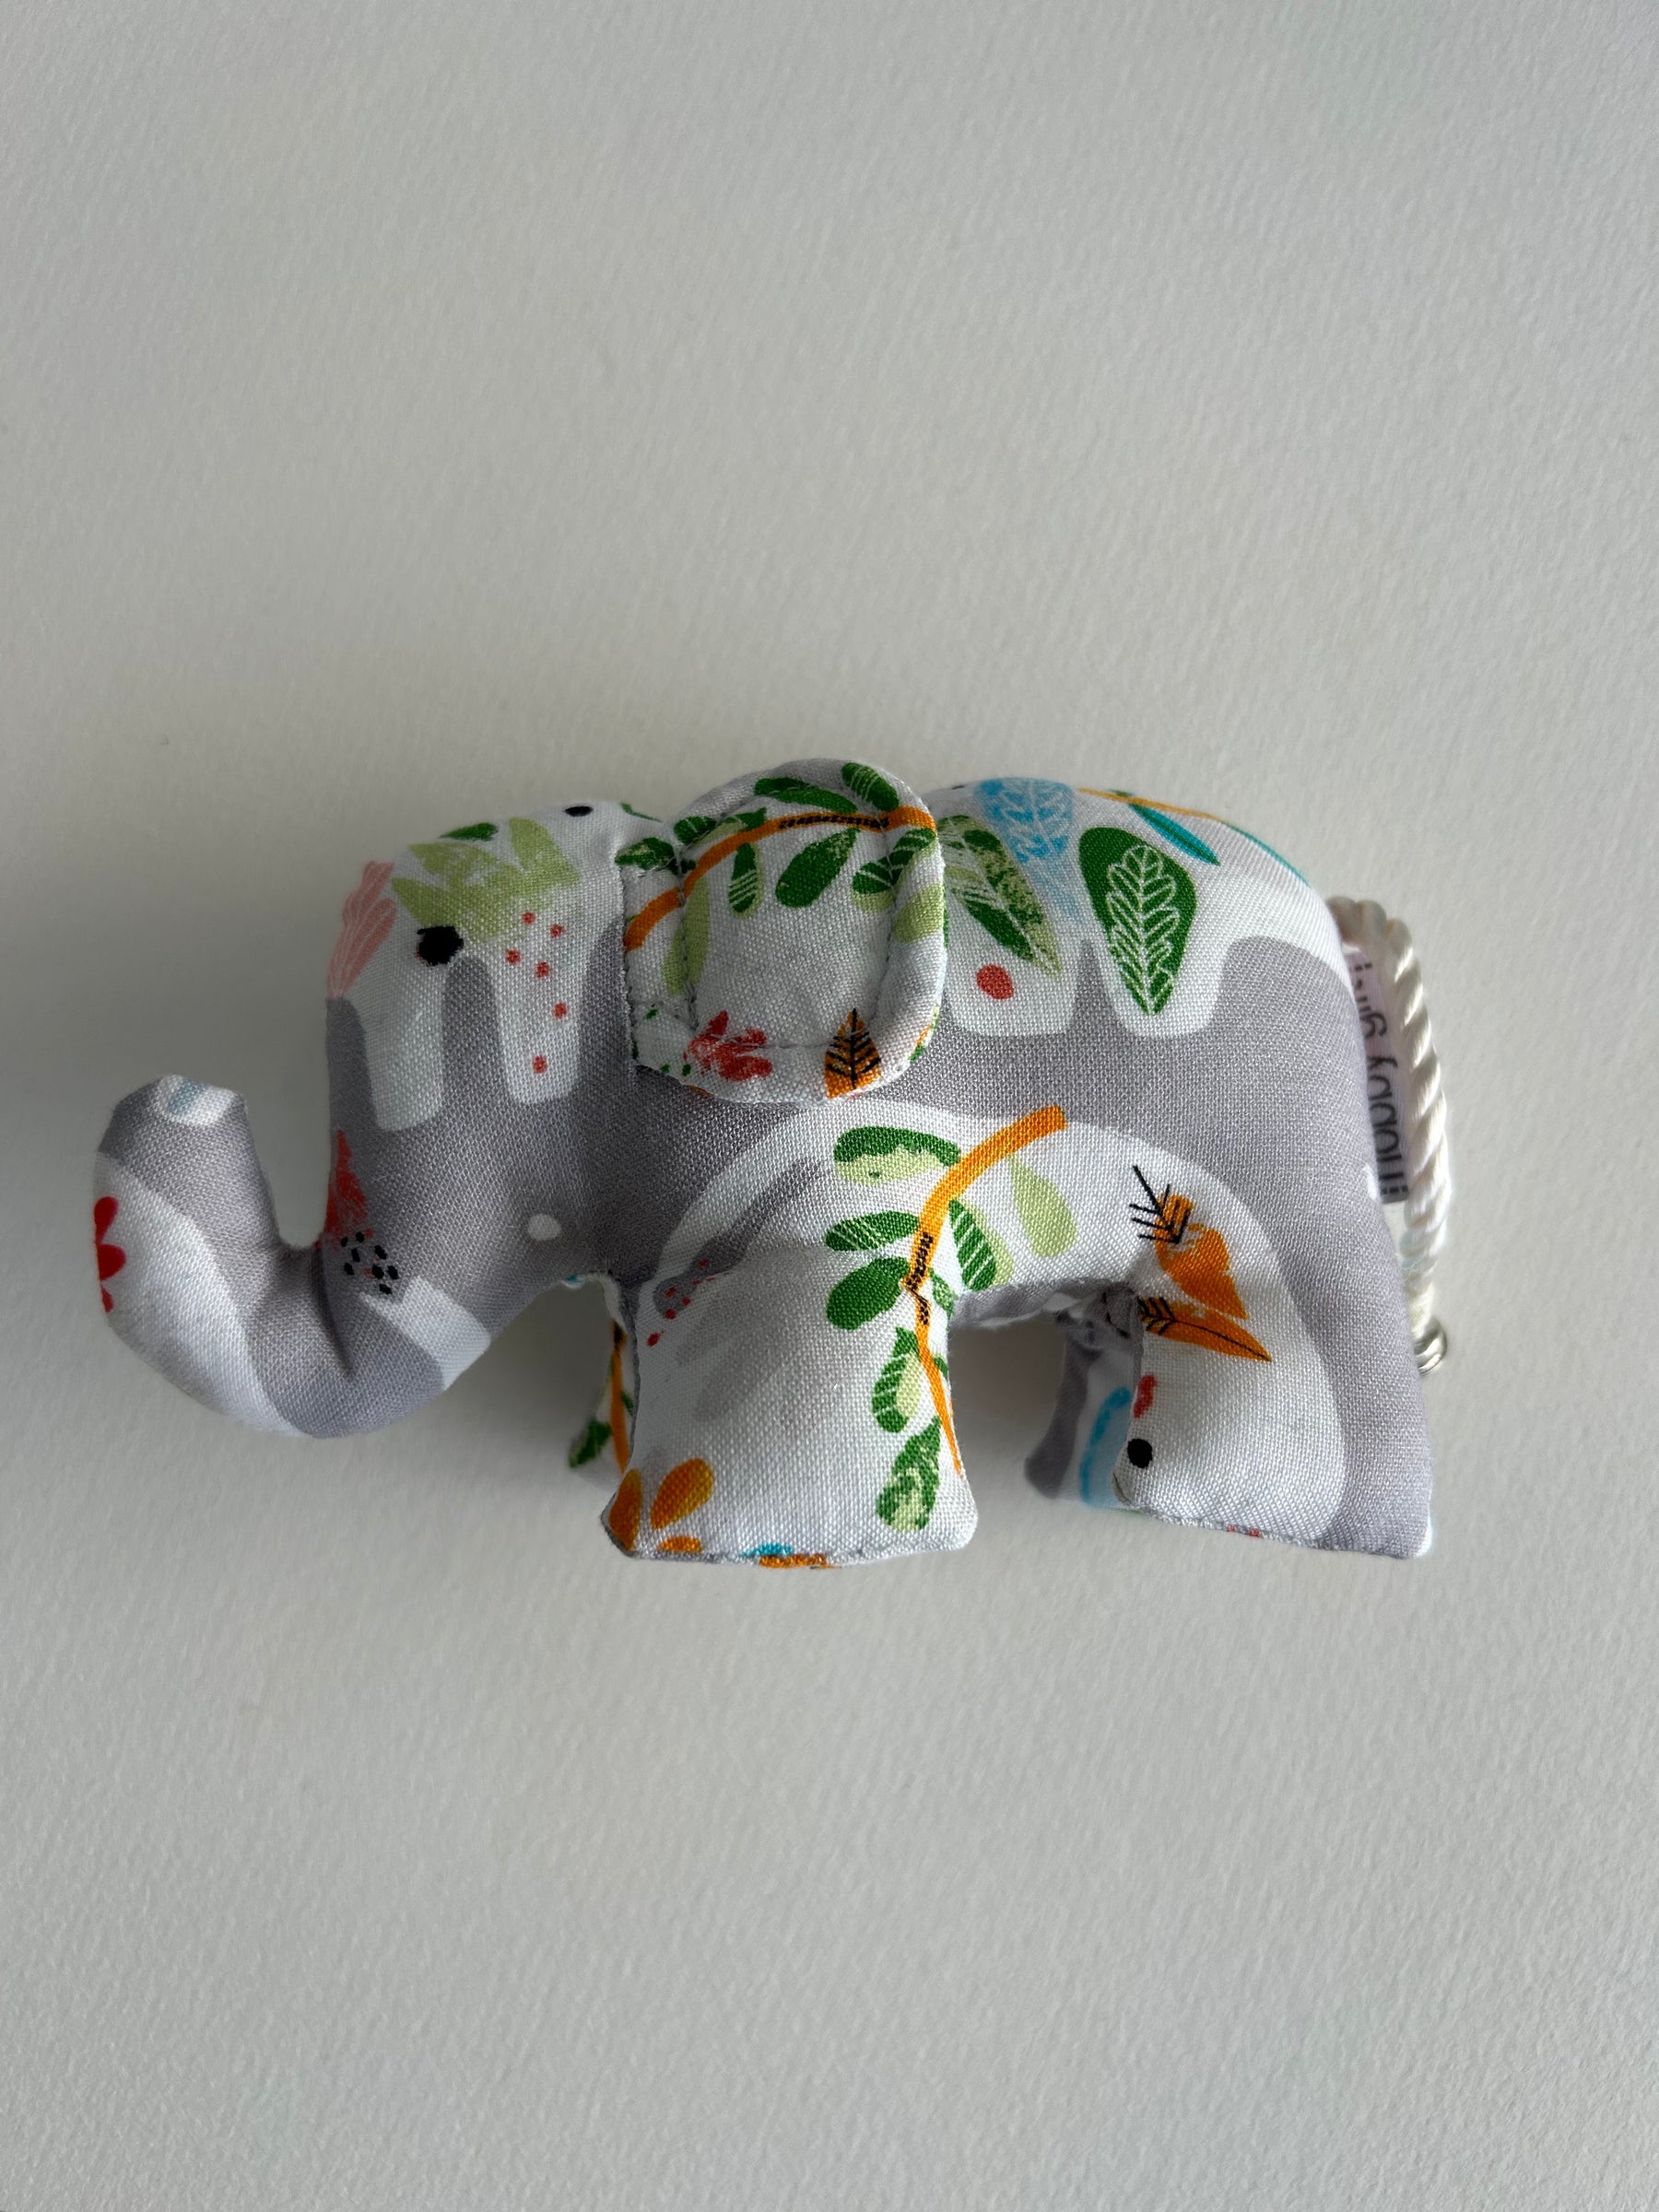 Elephant Pincushion by Hobby Gift